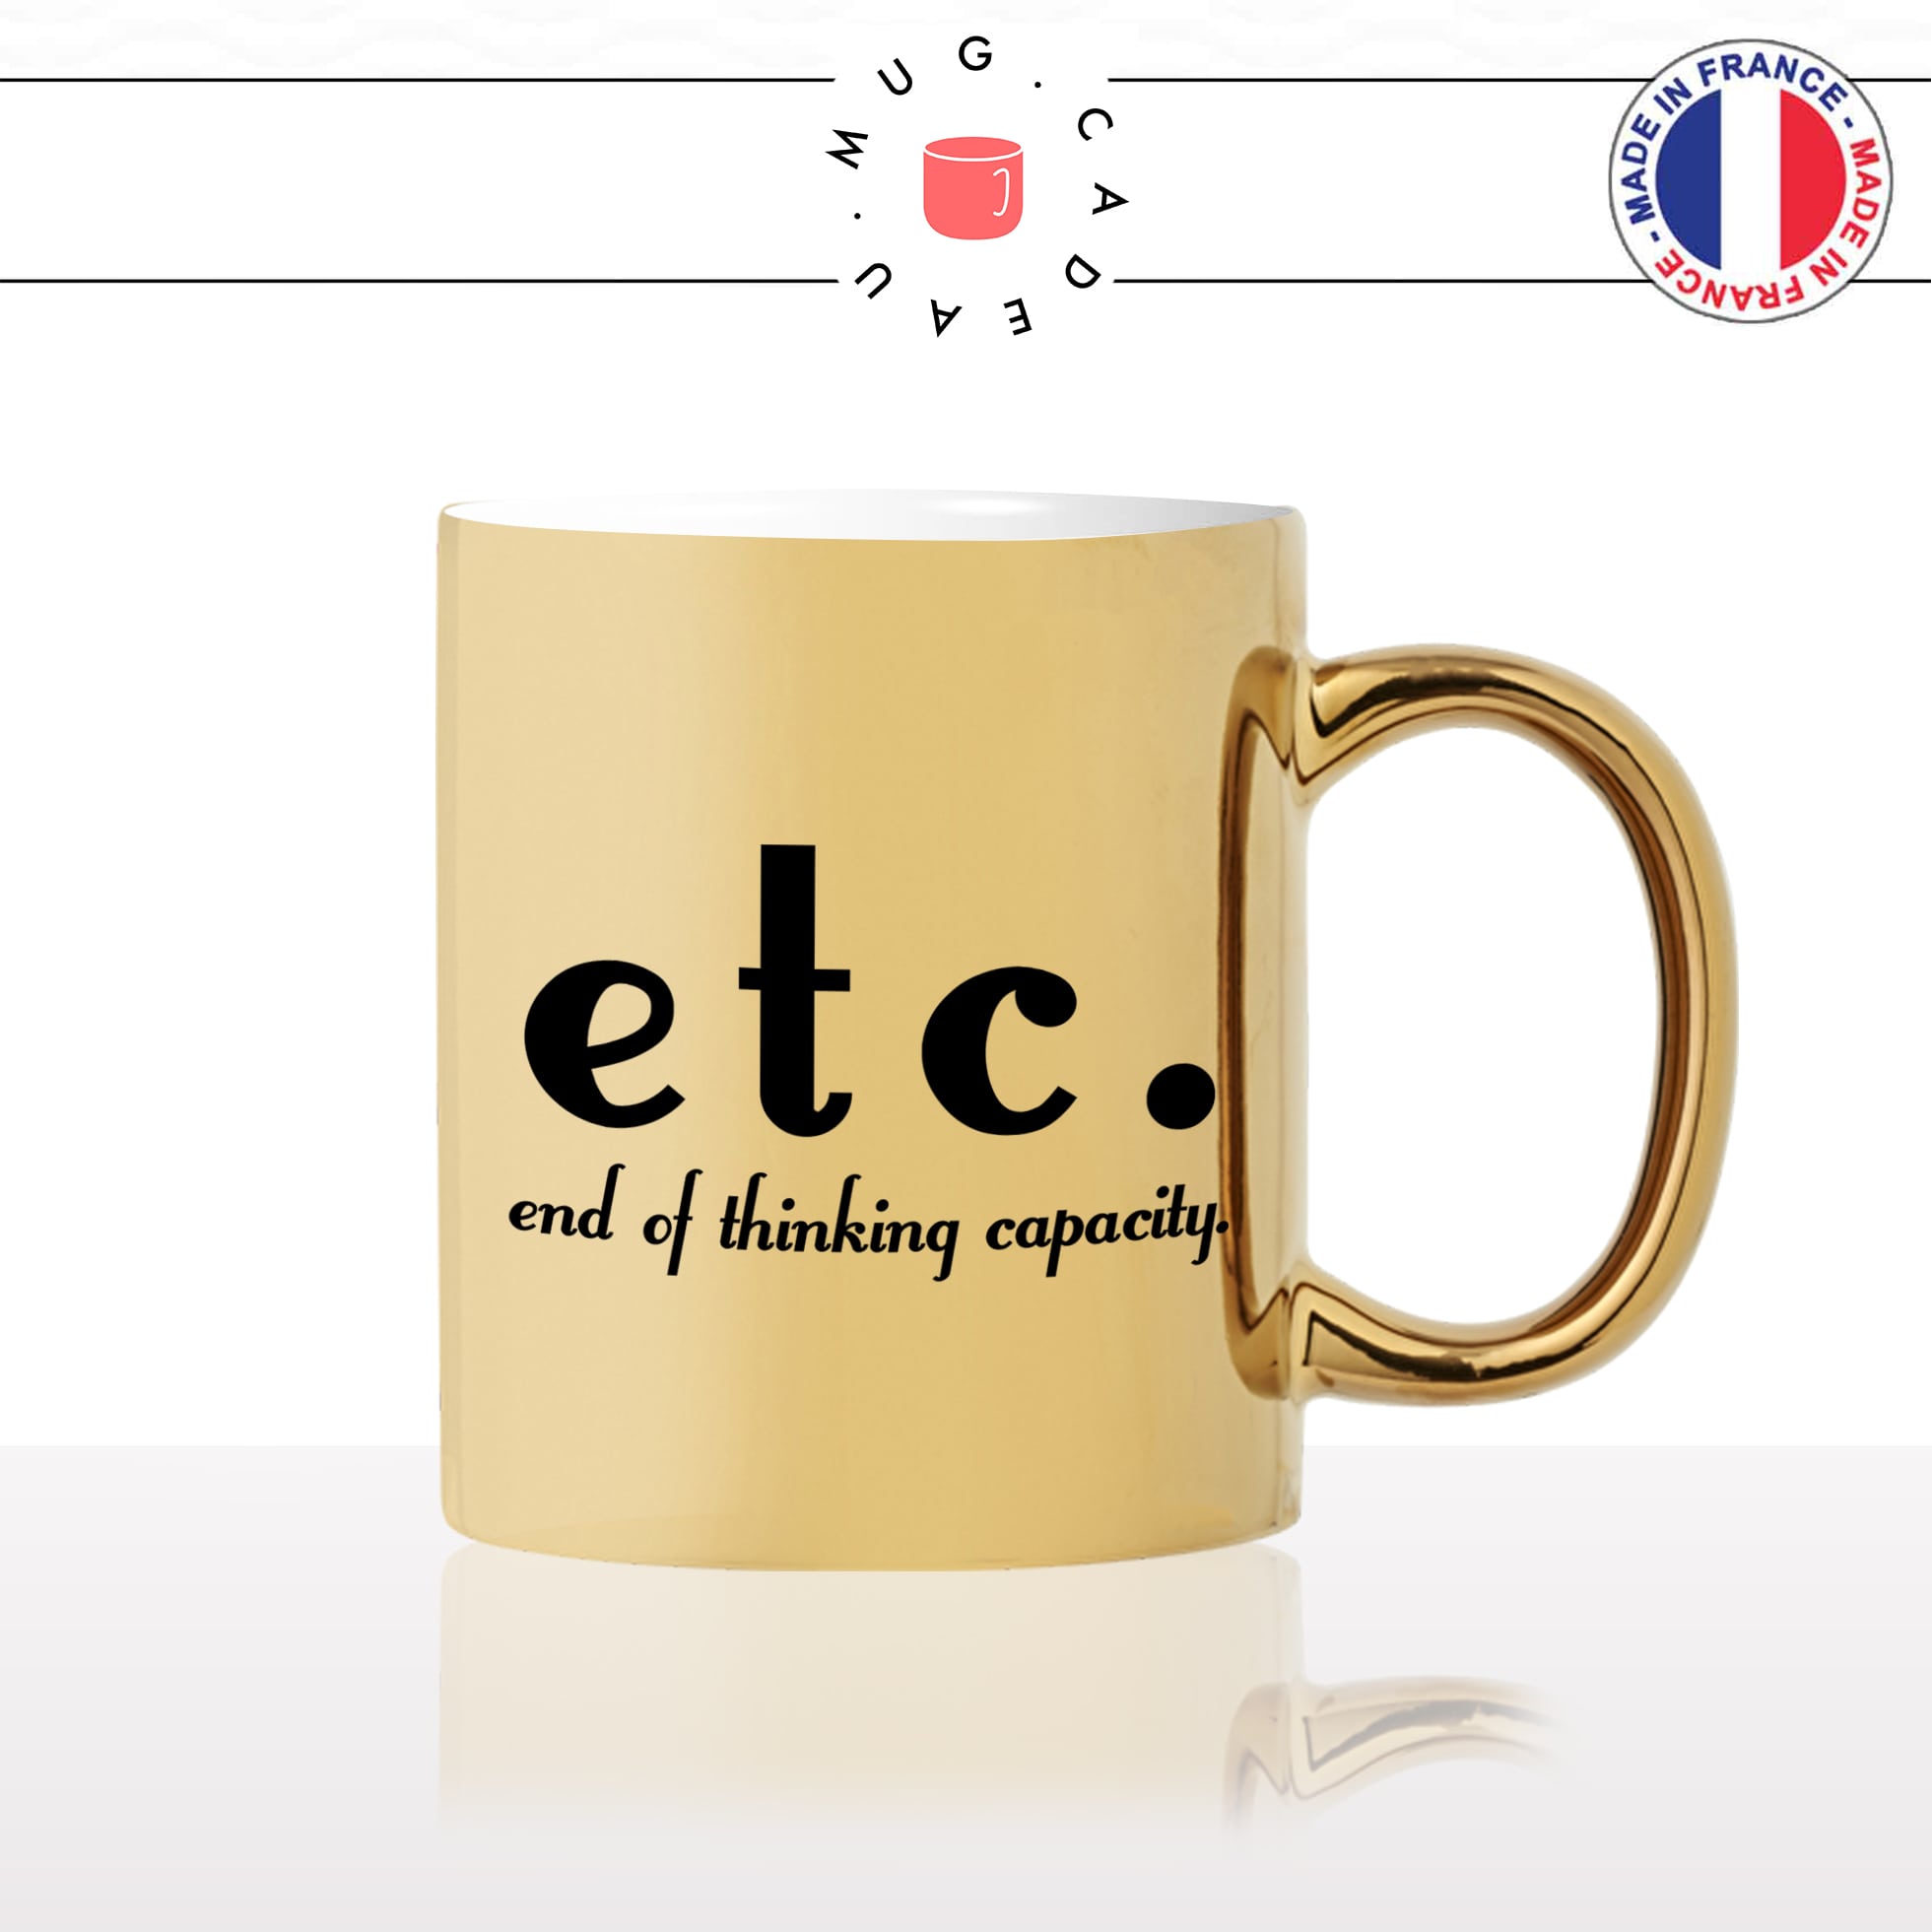 mug-tasse-doré-or-gold-etc-end-of-thinking-capacity-latin-francais-langue-original-cool-humour-fun-idée-cadeau-personnalisé-café-thé2-min